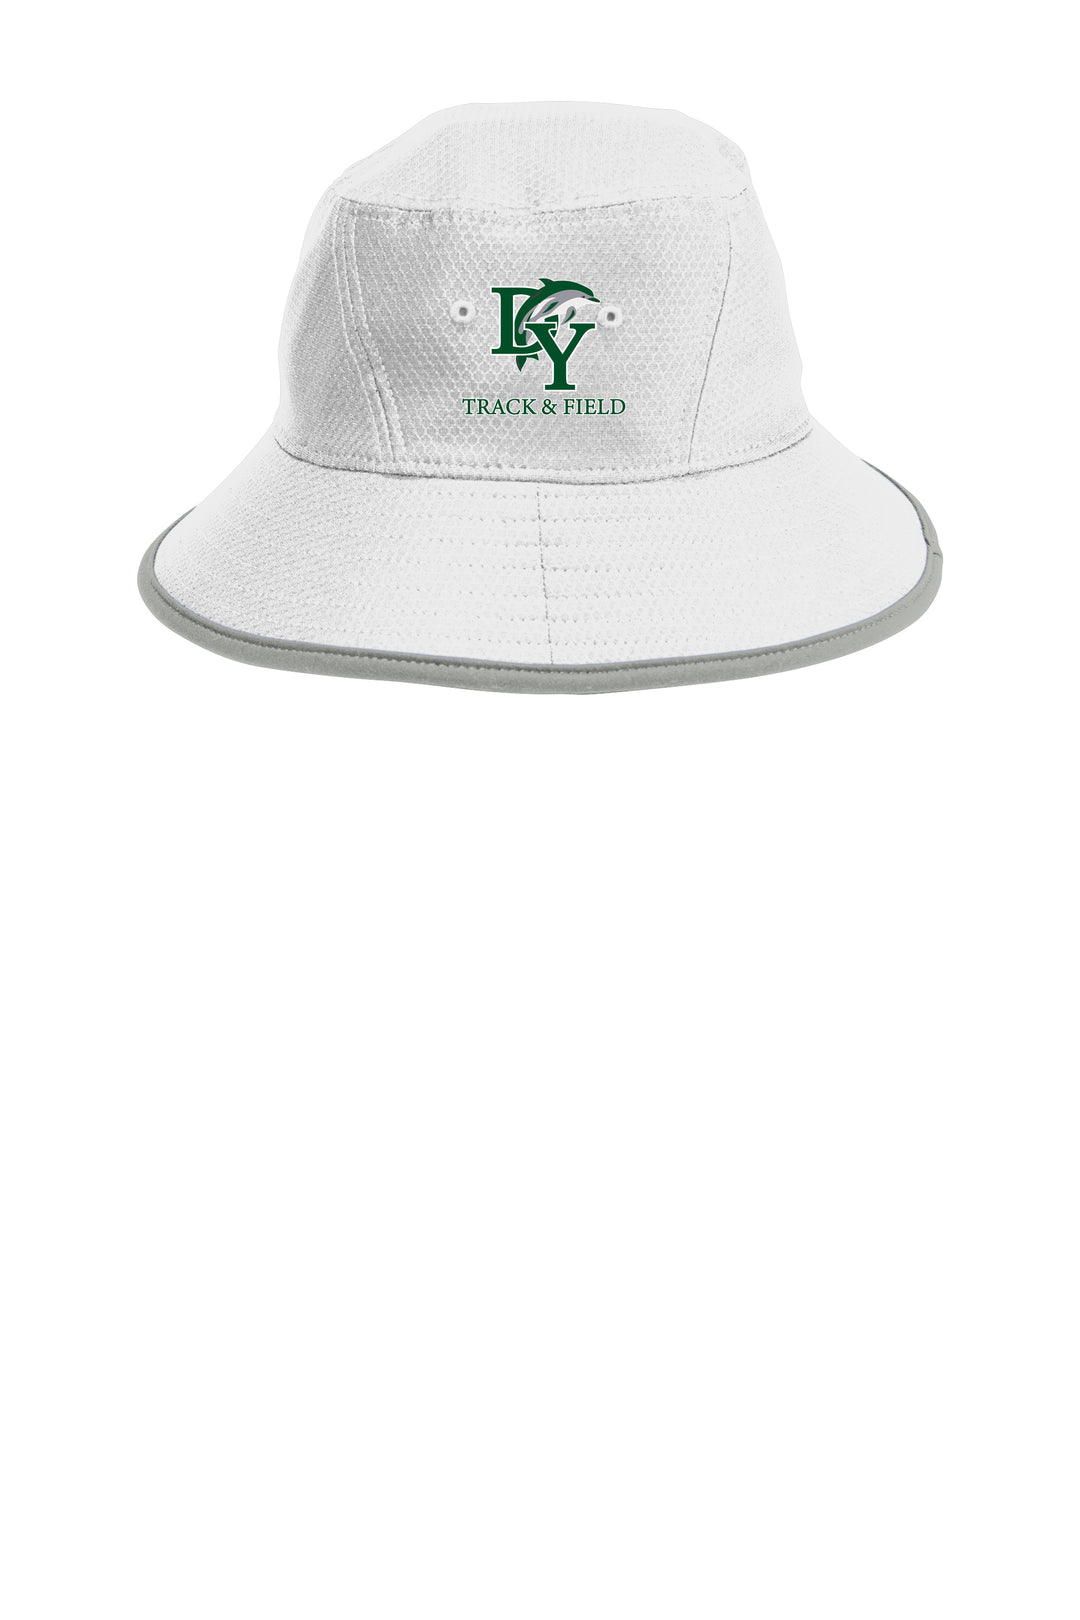 Dennis Yarmouth Track & Field Bucket Hat (NE800)